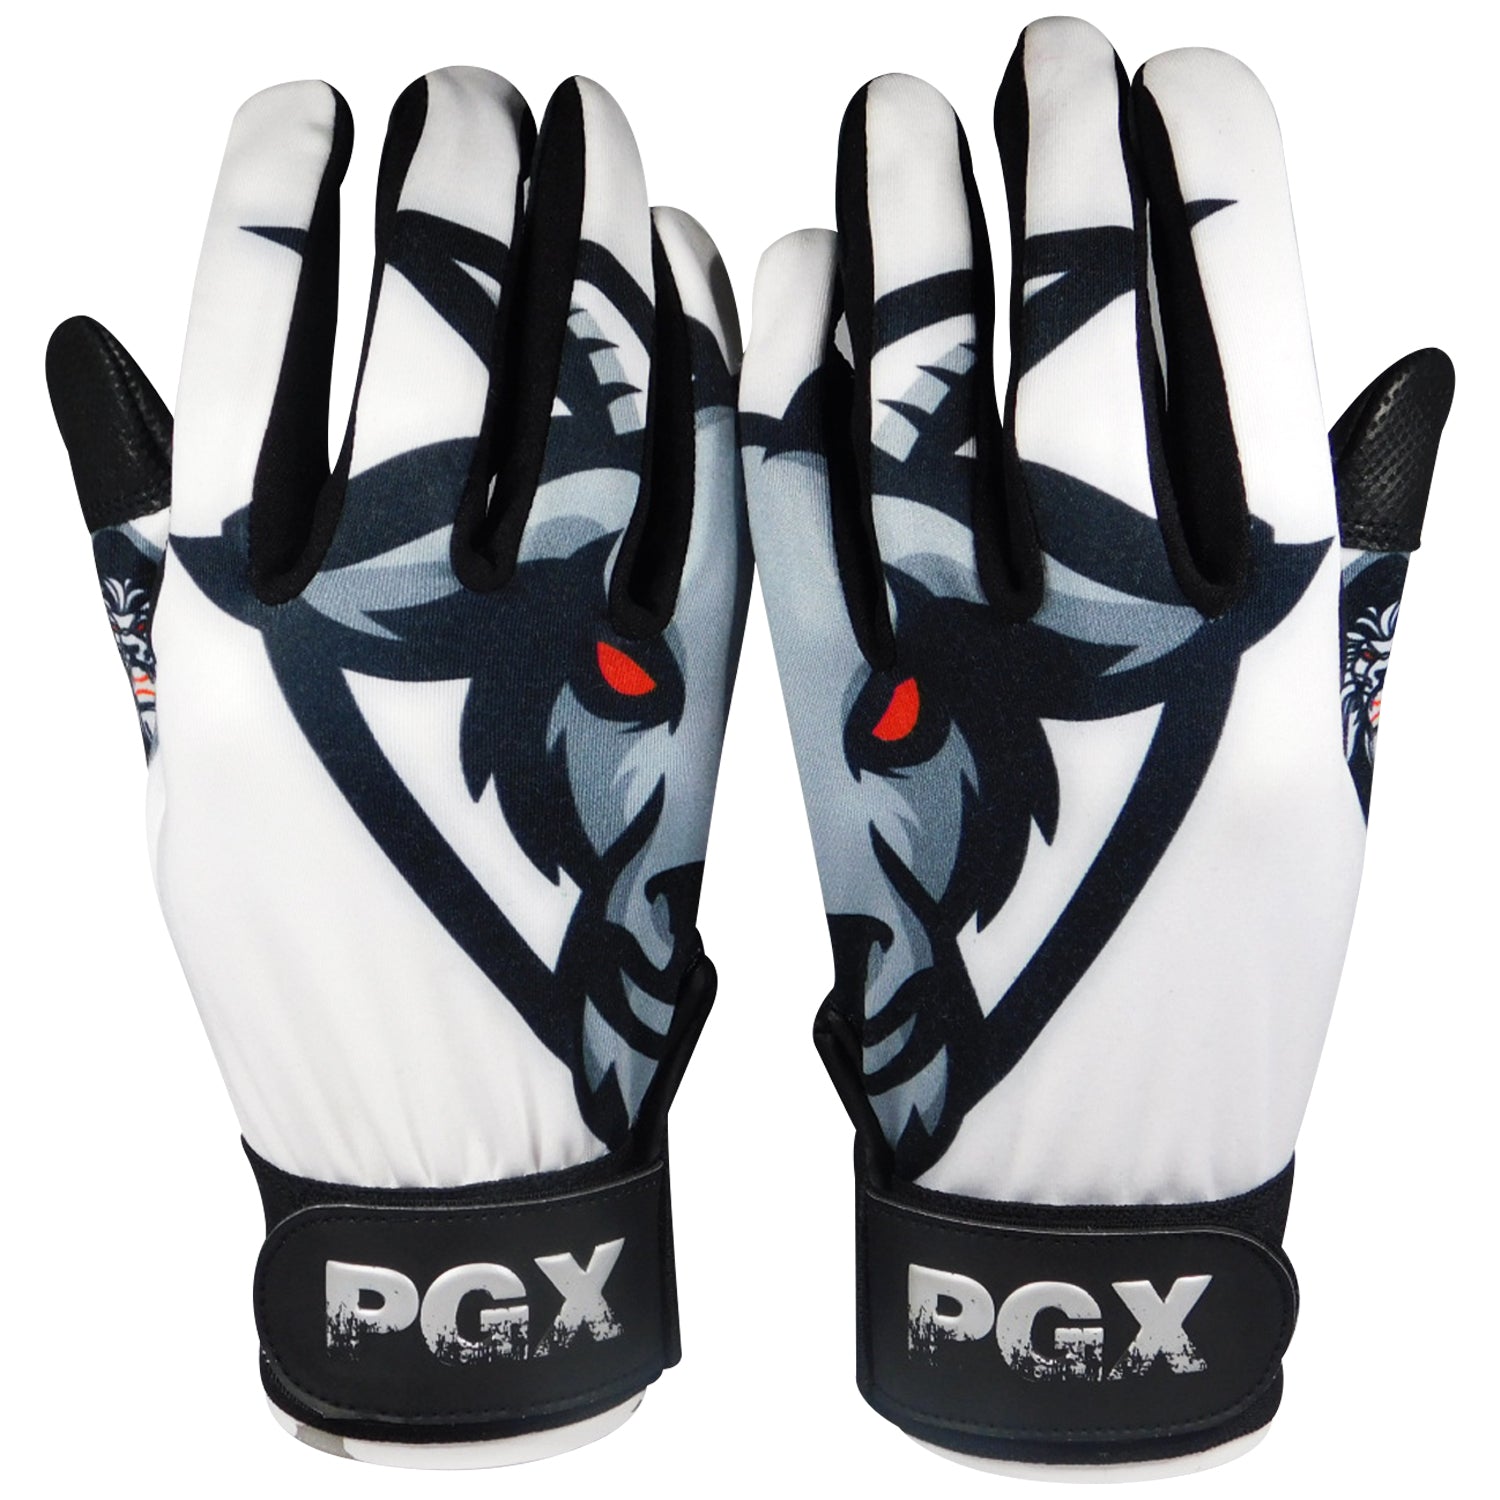  MaxBP Frost Gear Cold Weather Polar-Flex Batting Gloves, AS,  Black : Sports & Outdoors